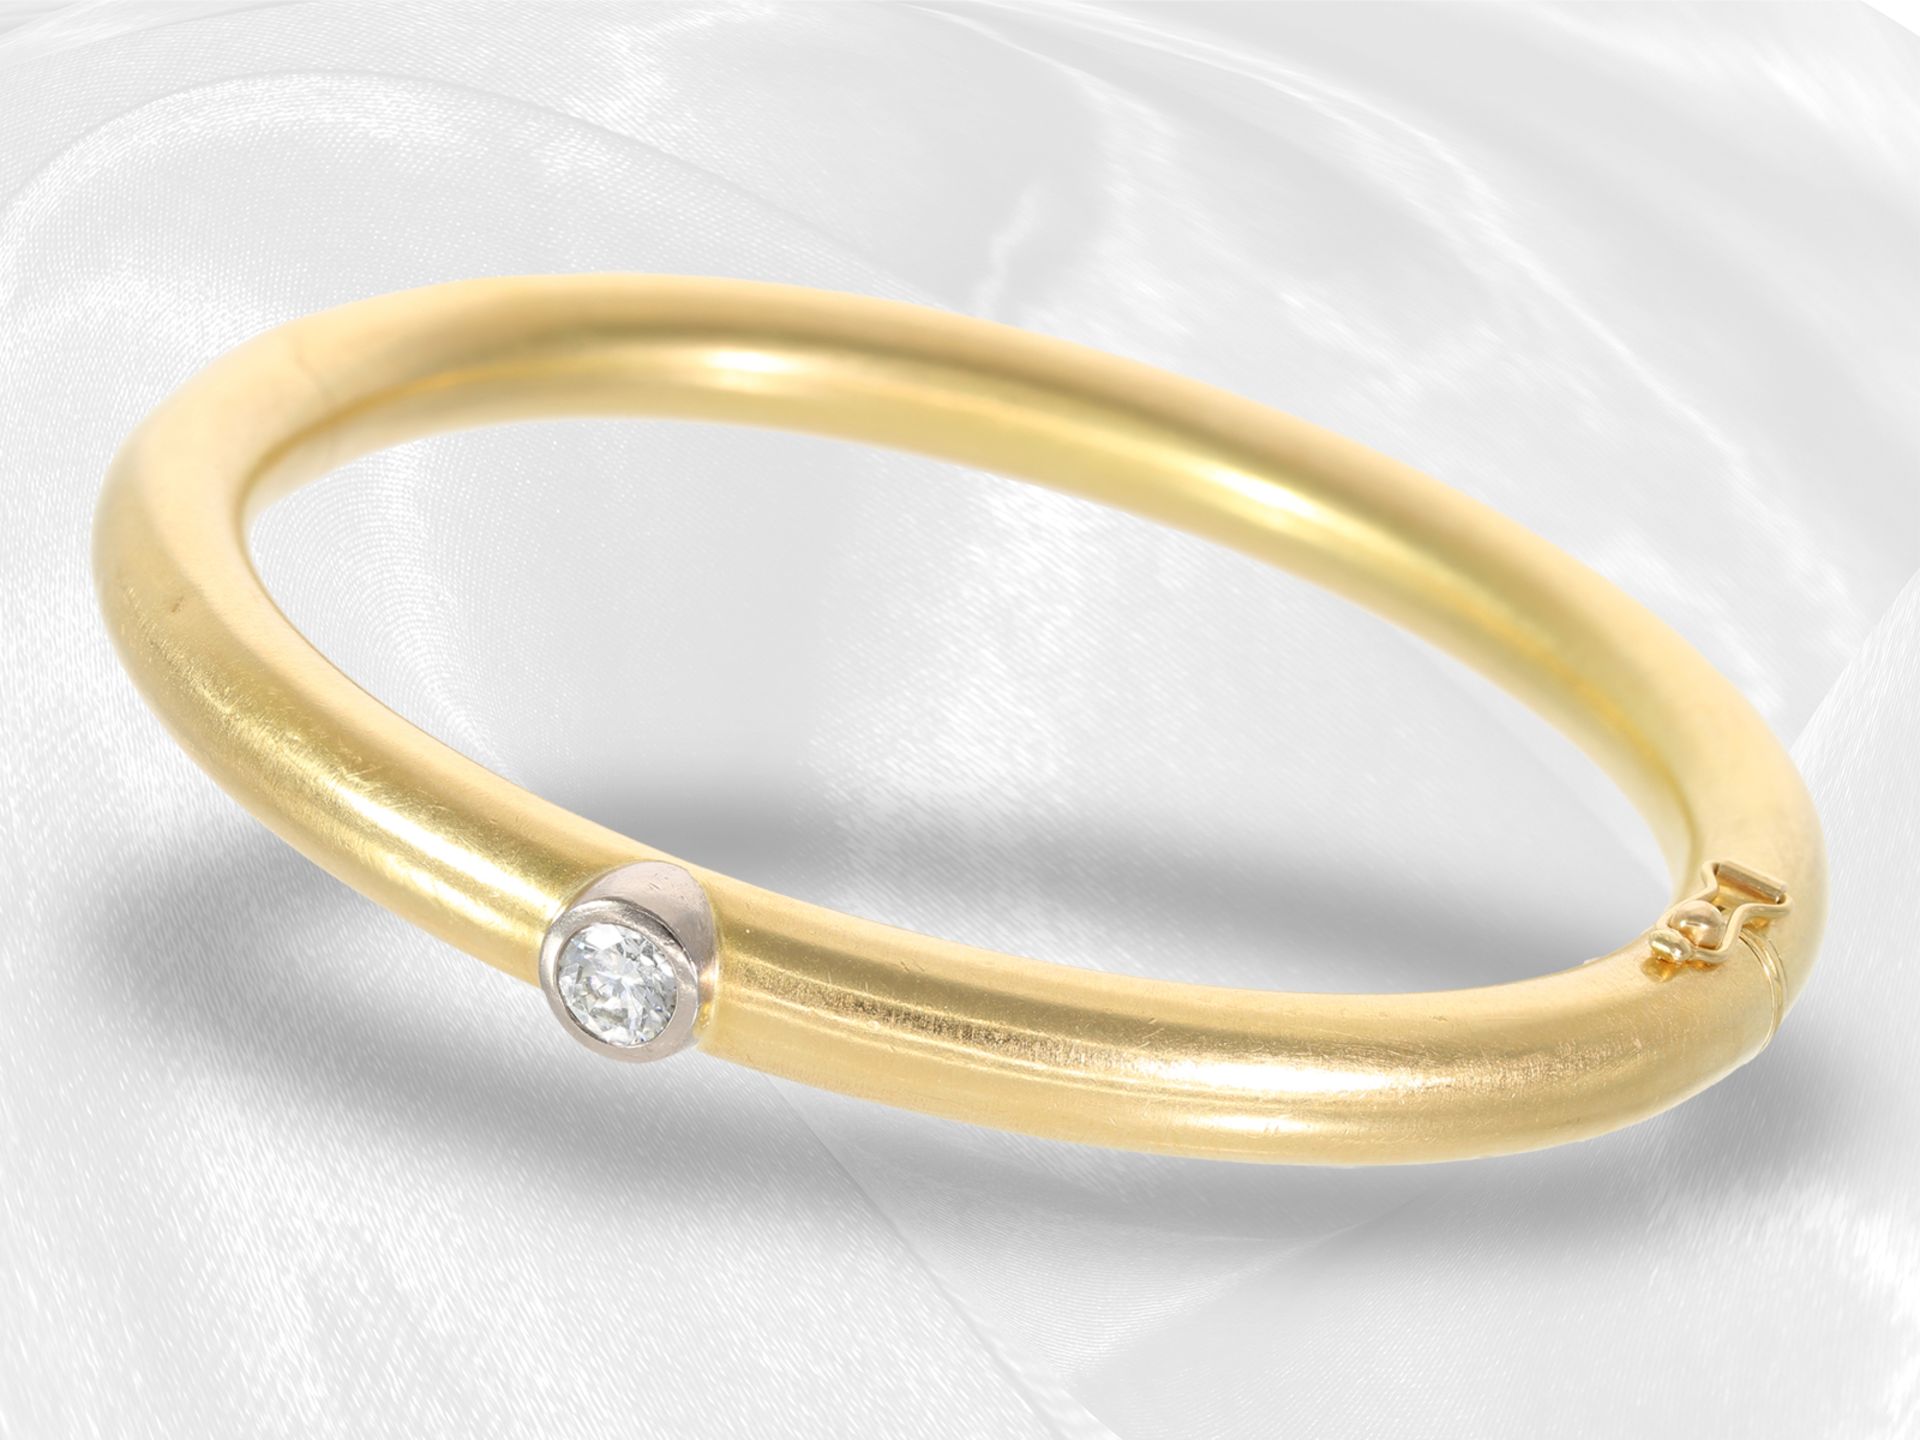 Bangle: handmade designer bangle with beautiful diamond, approx. 0.52ct, 18K gold